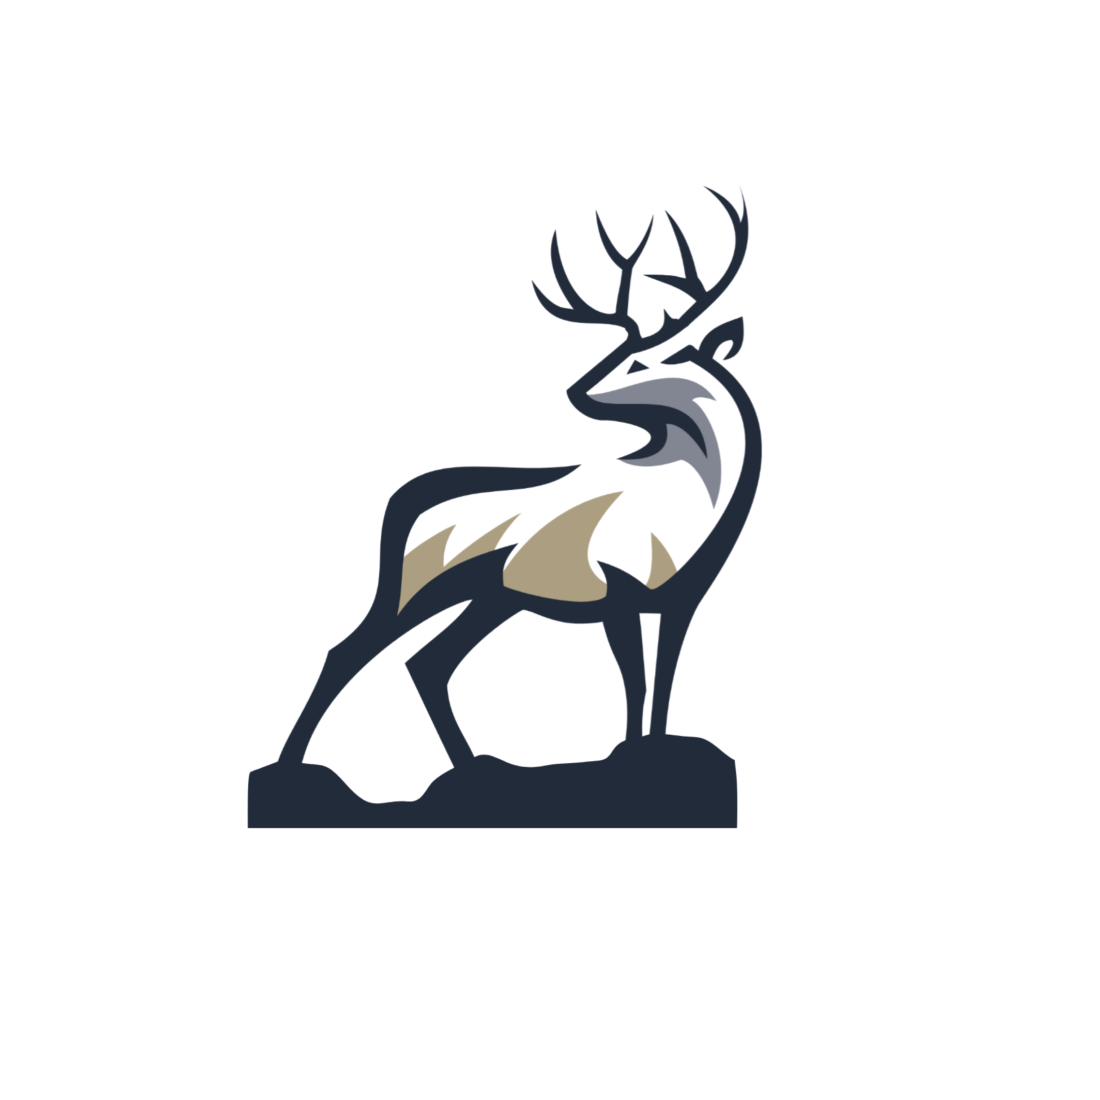 Minimal Deer Logo Design cover image.